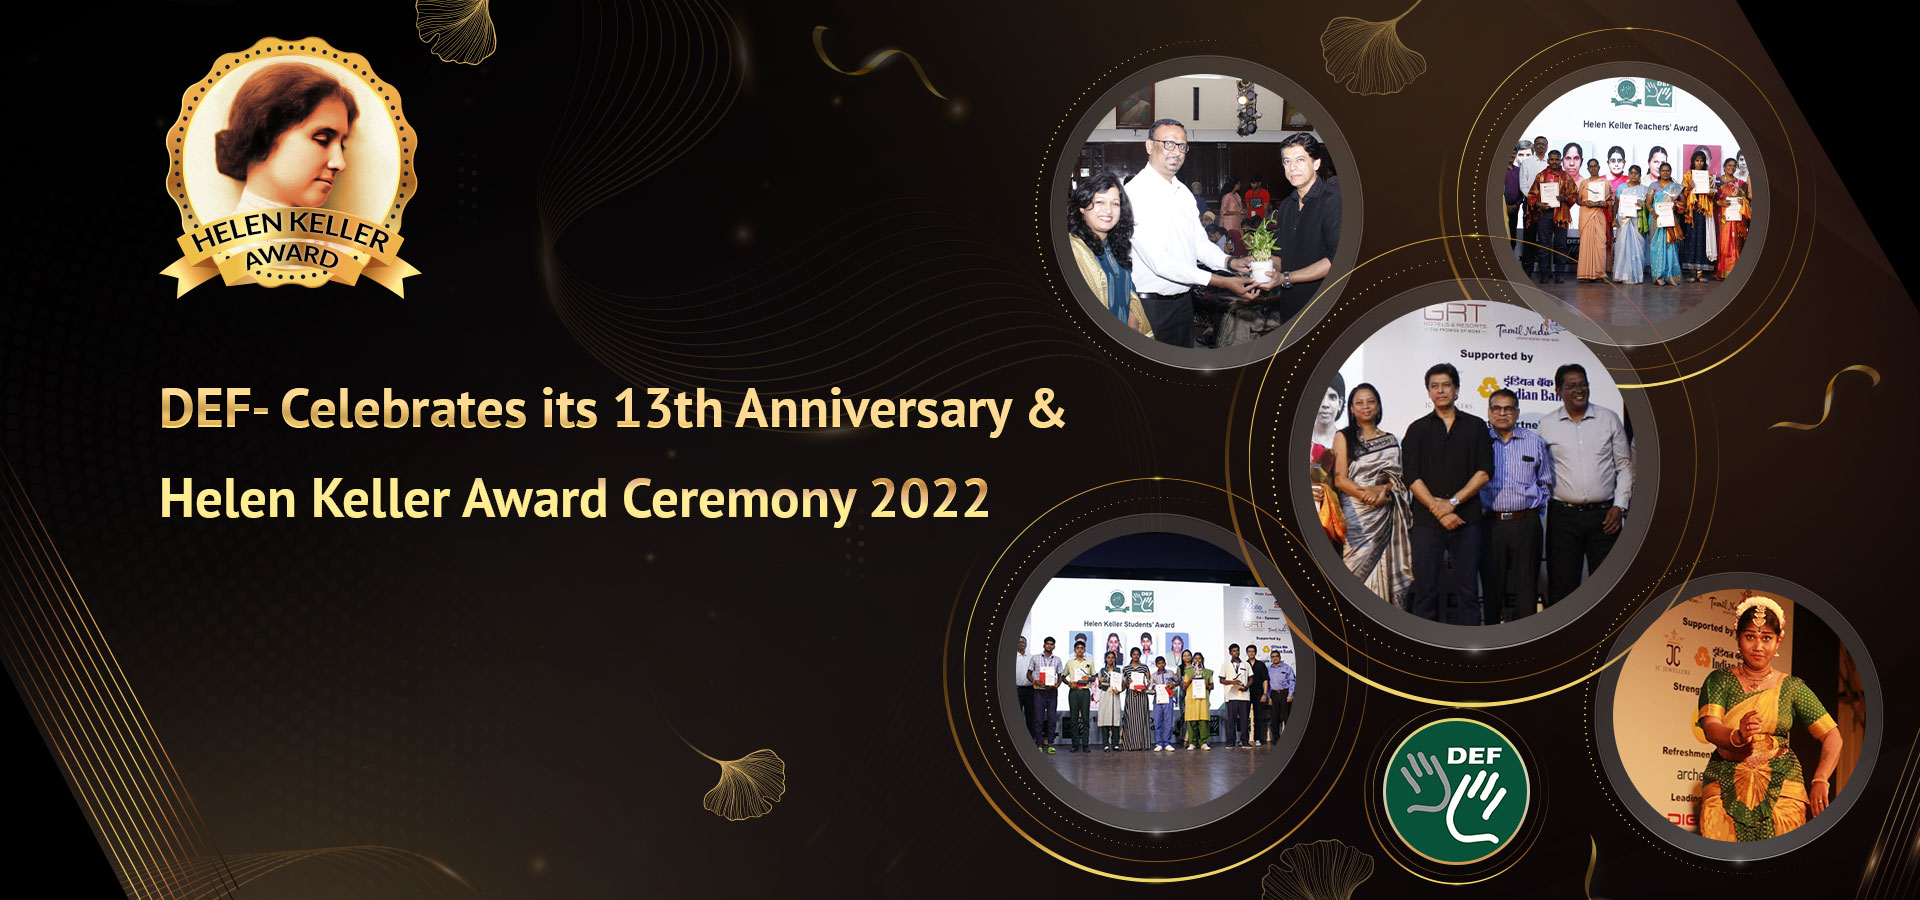 DEF- Celebrates its 13th Anniversary & Helen Keller Award Ceremony 2022